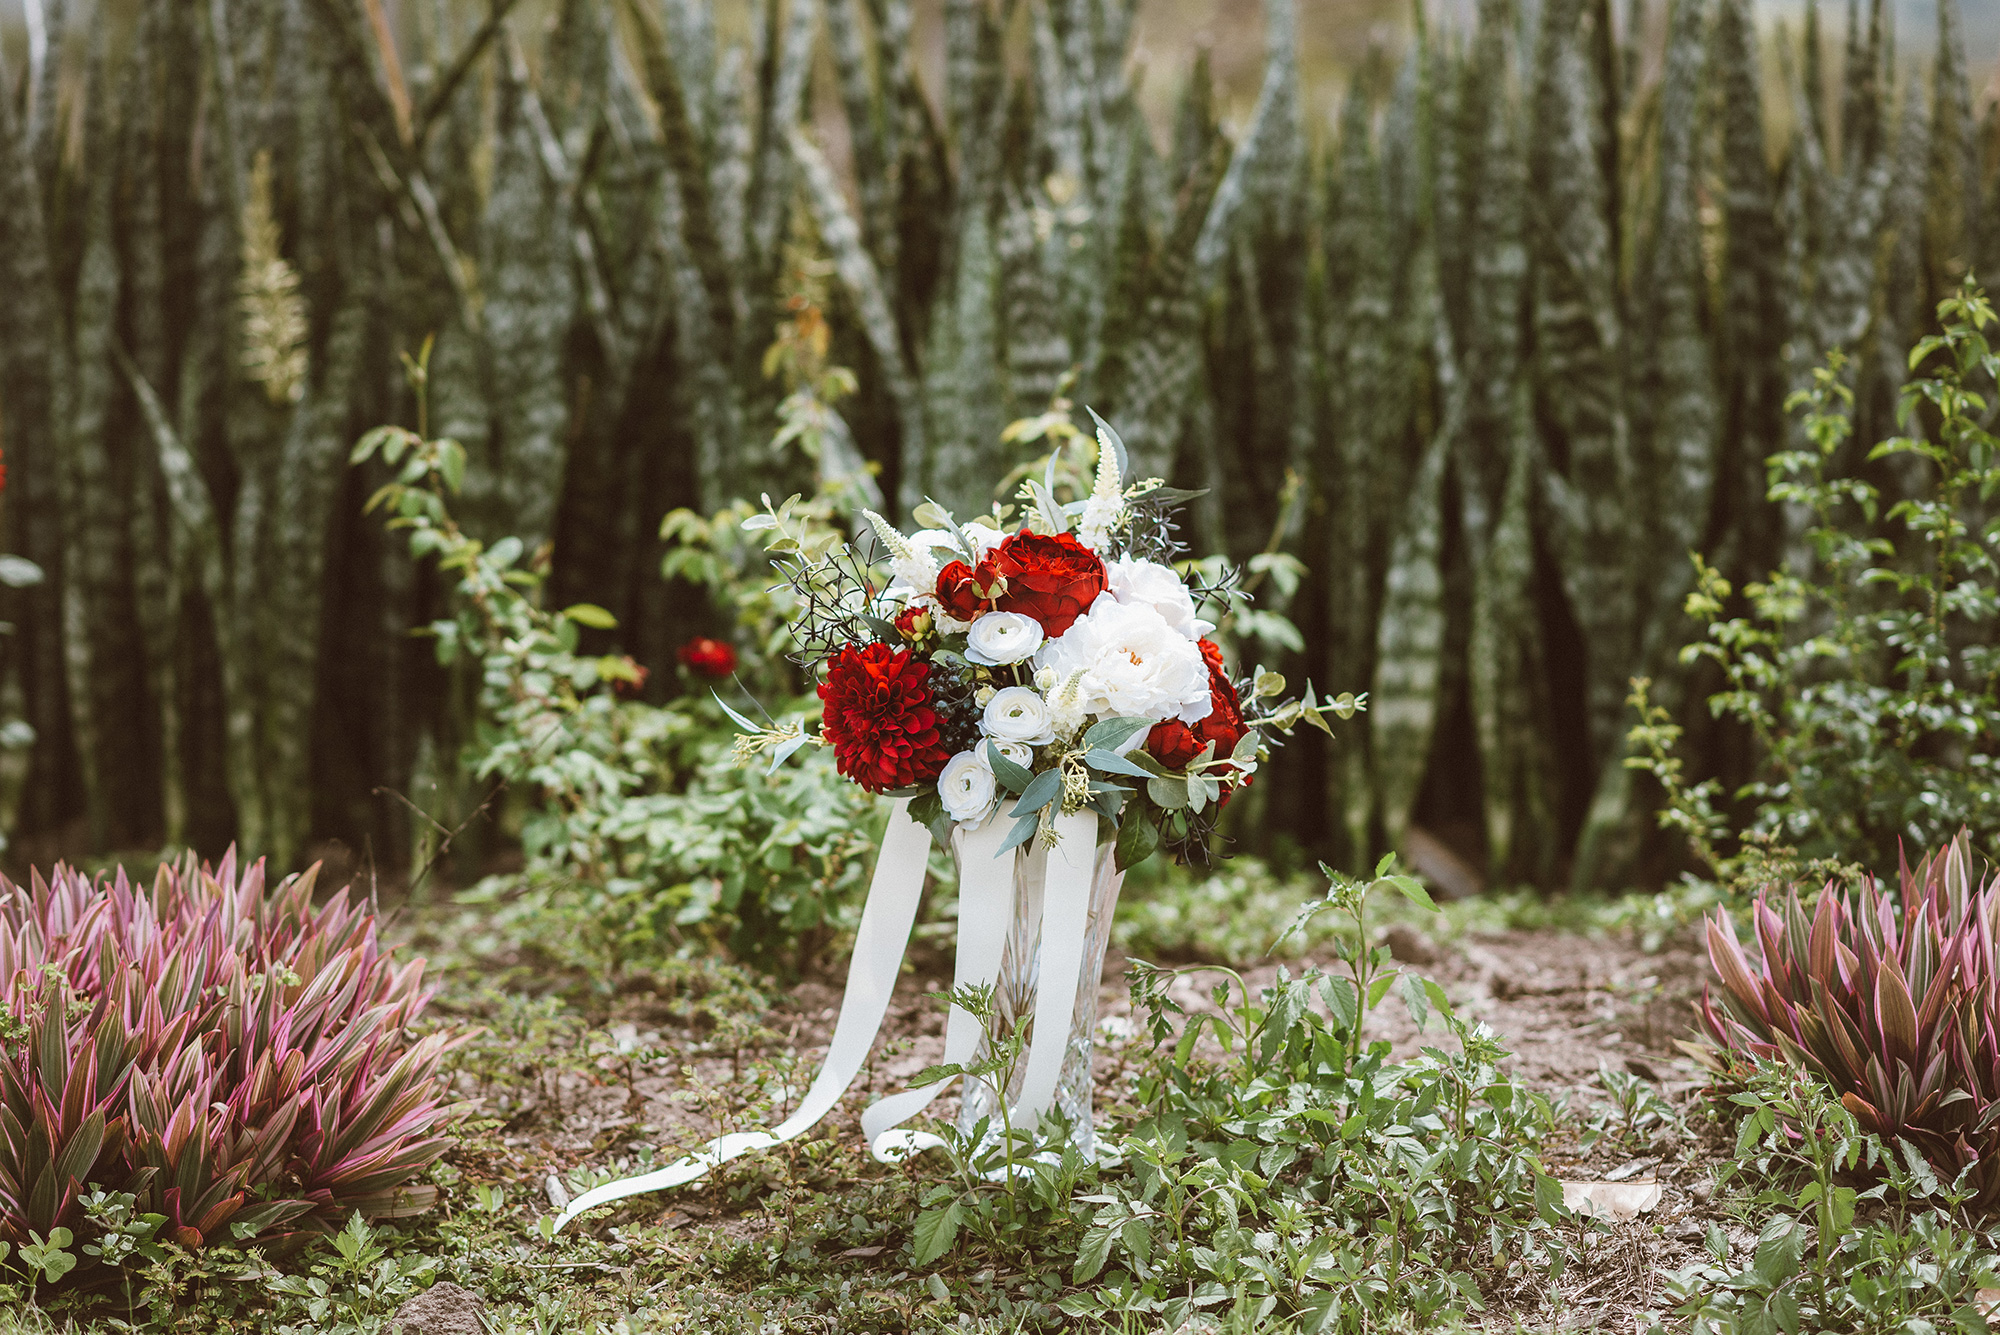 Sara_Frank_Romantic-Garden-Wedding_The-Raw-Photographer_038